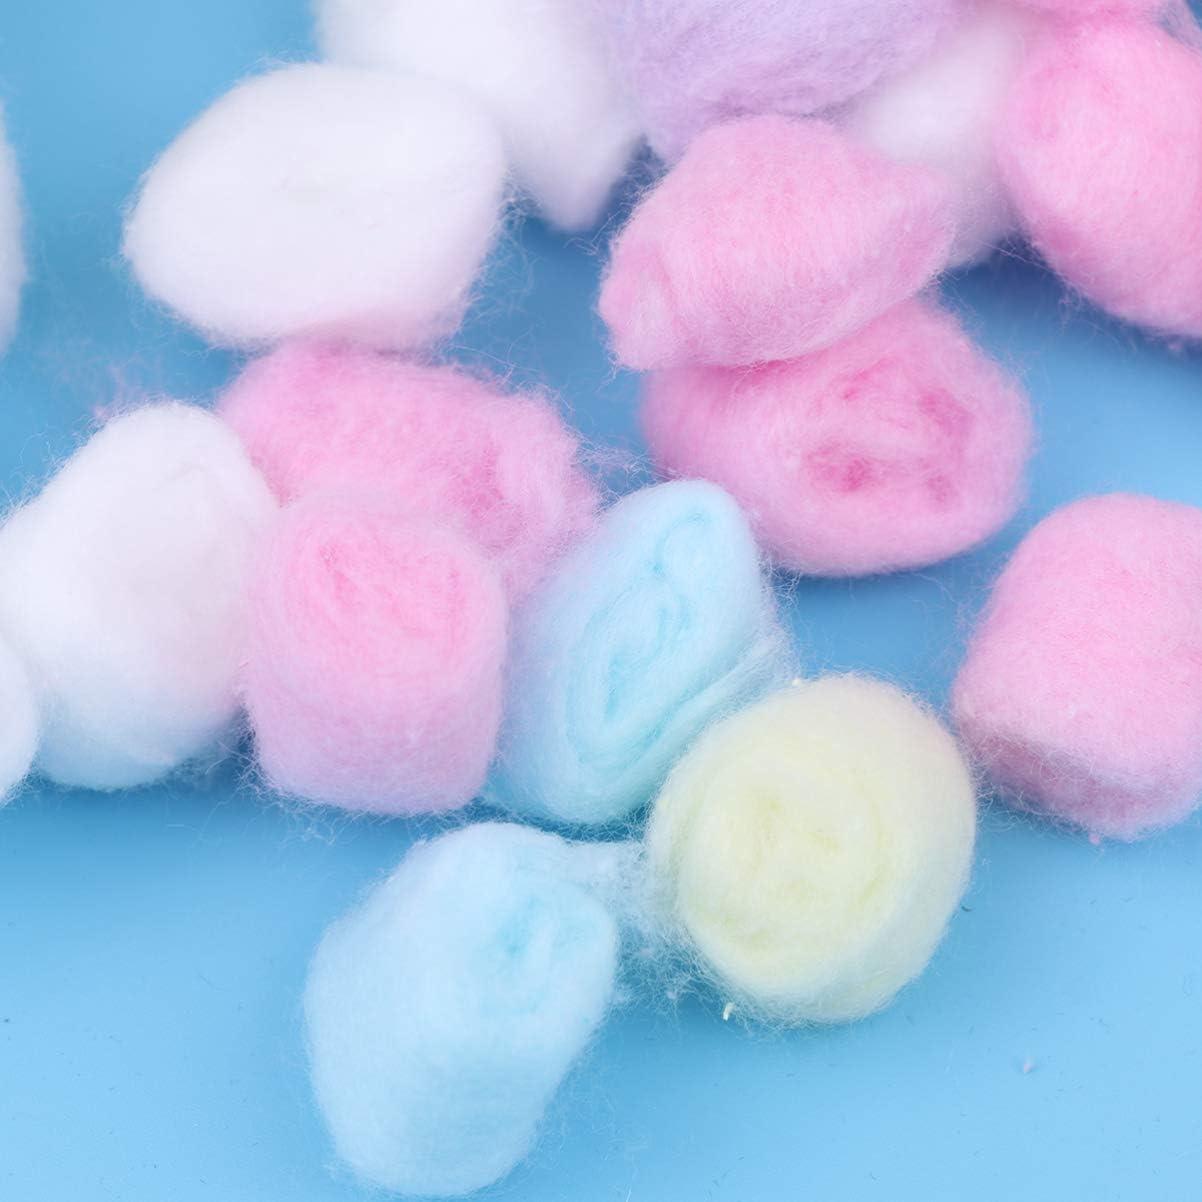 Lurrose Lurrose 1 Bag/500g Colored Cotton Balls Makeup Cotton